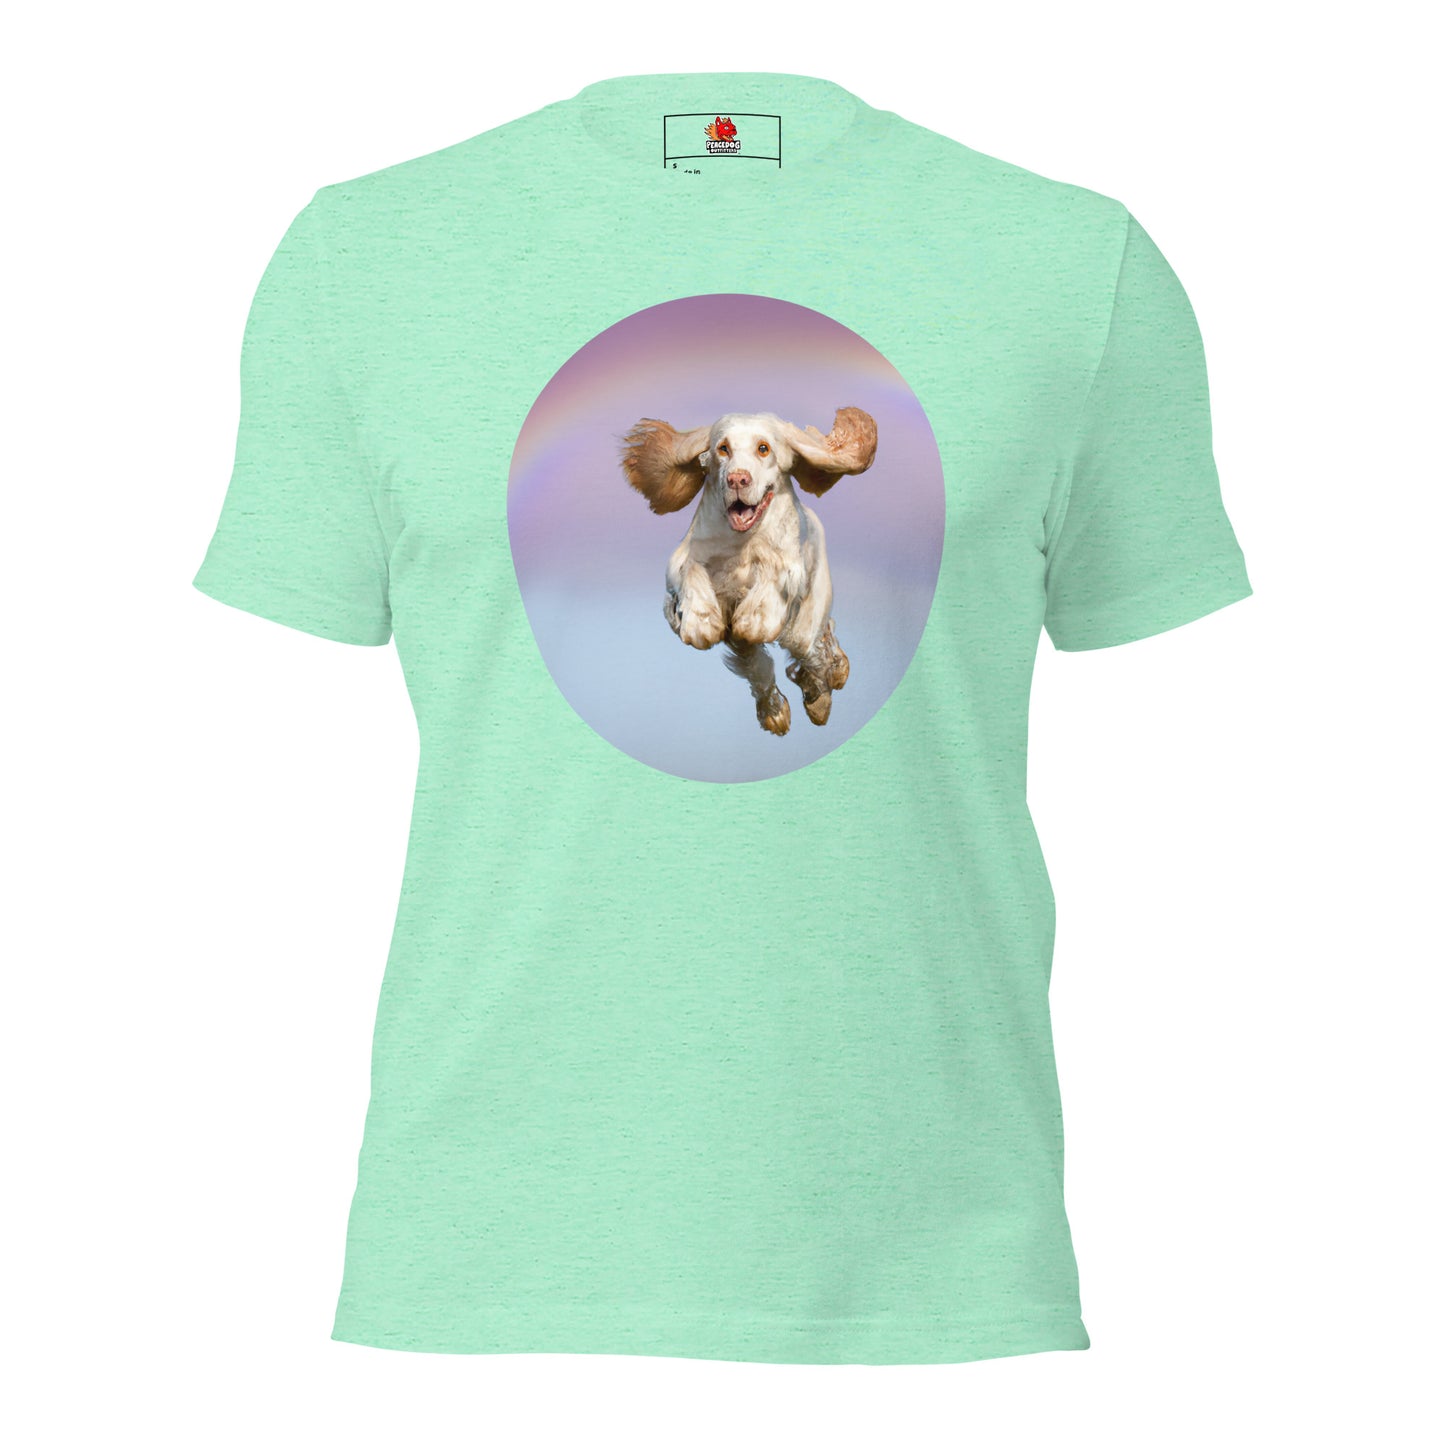 Spaniel Flying through a Rainbow T-shirt